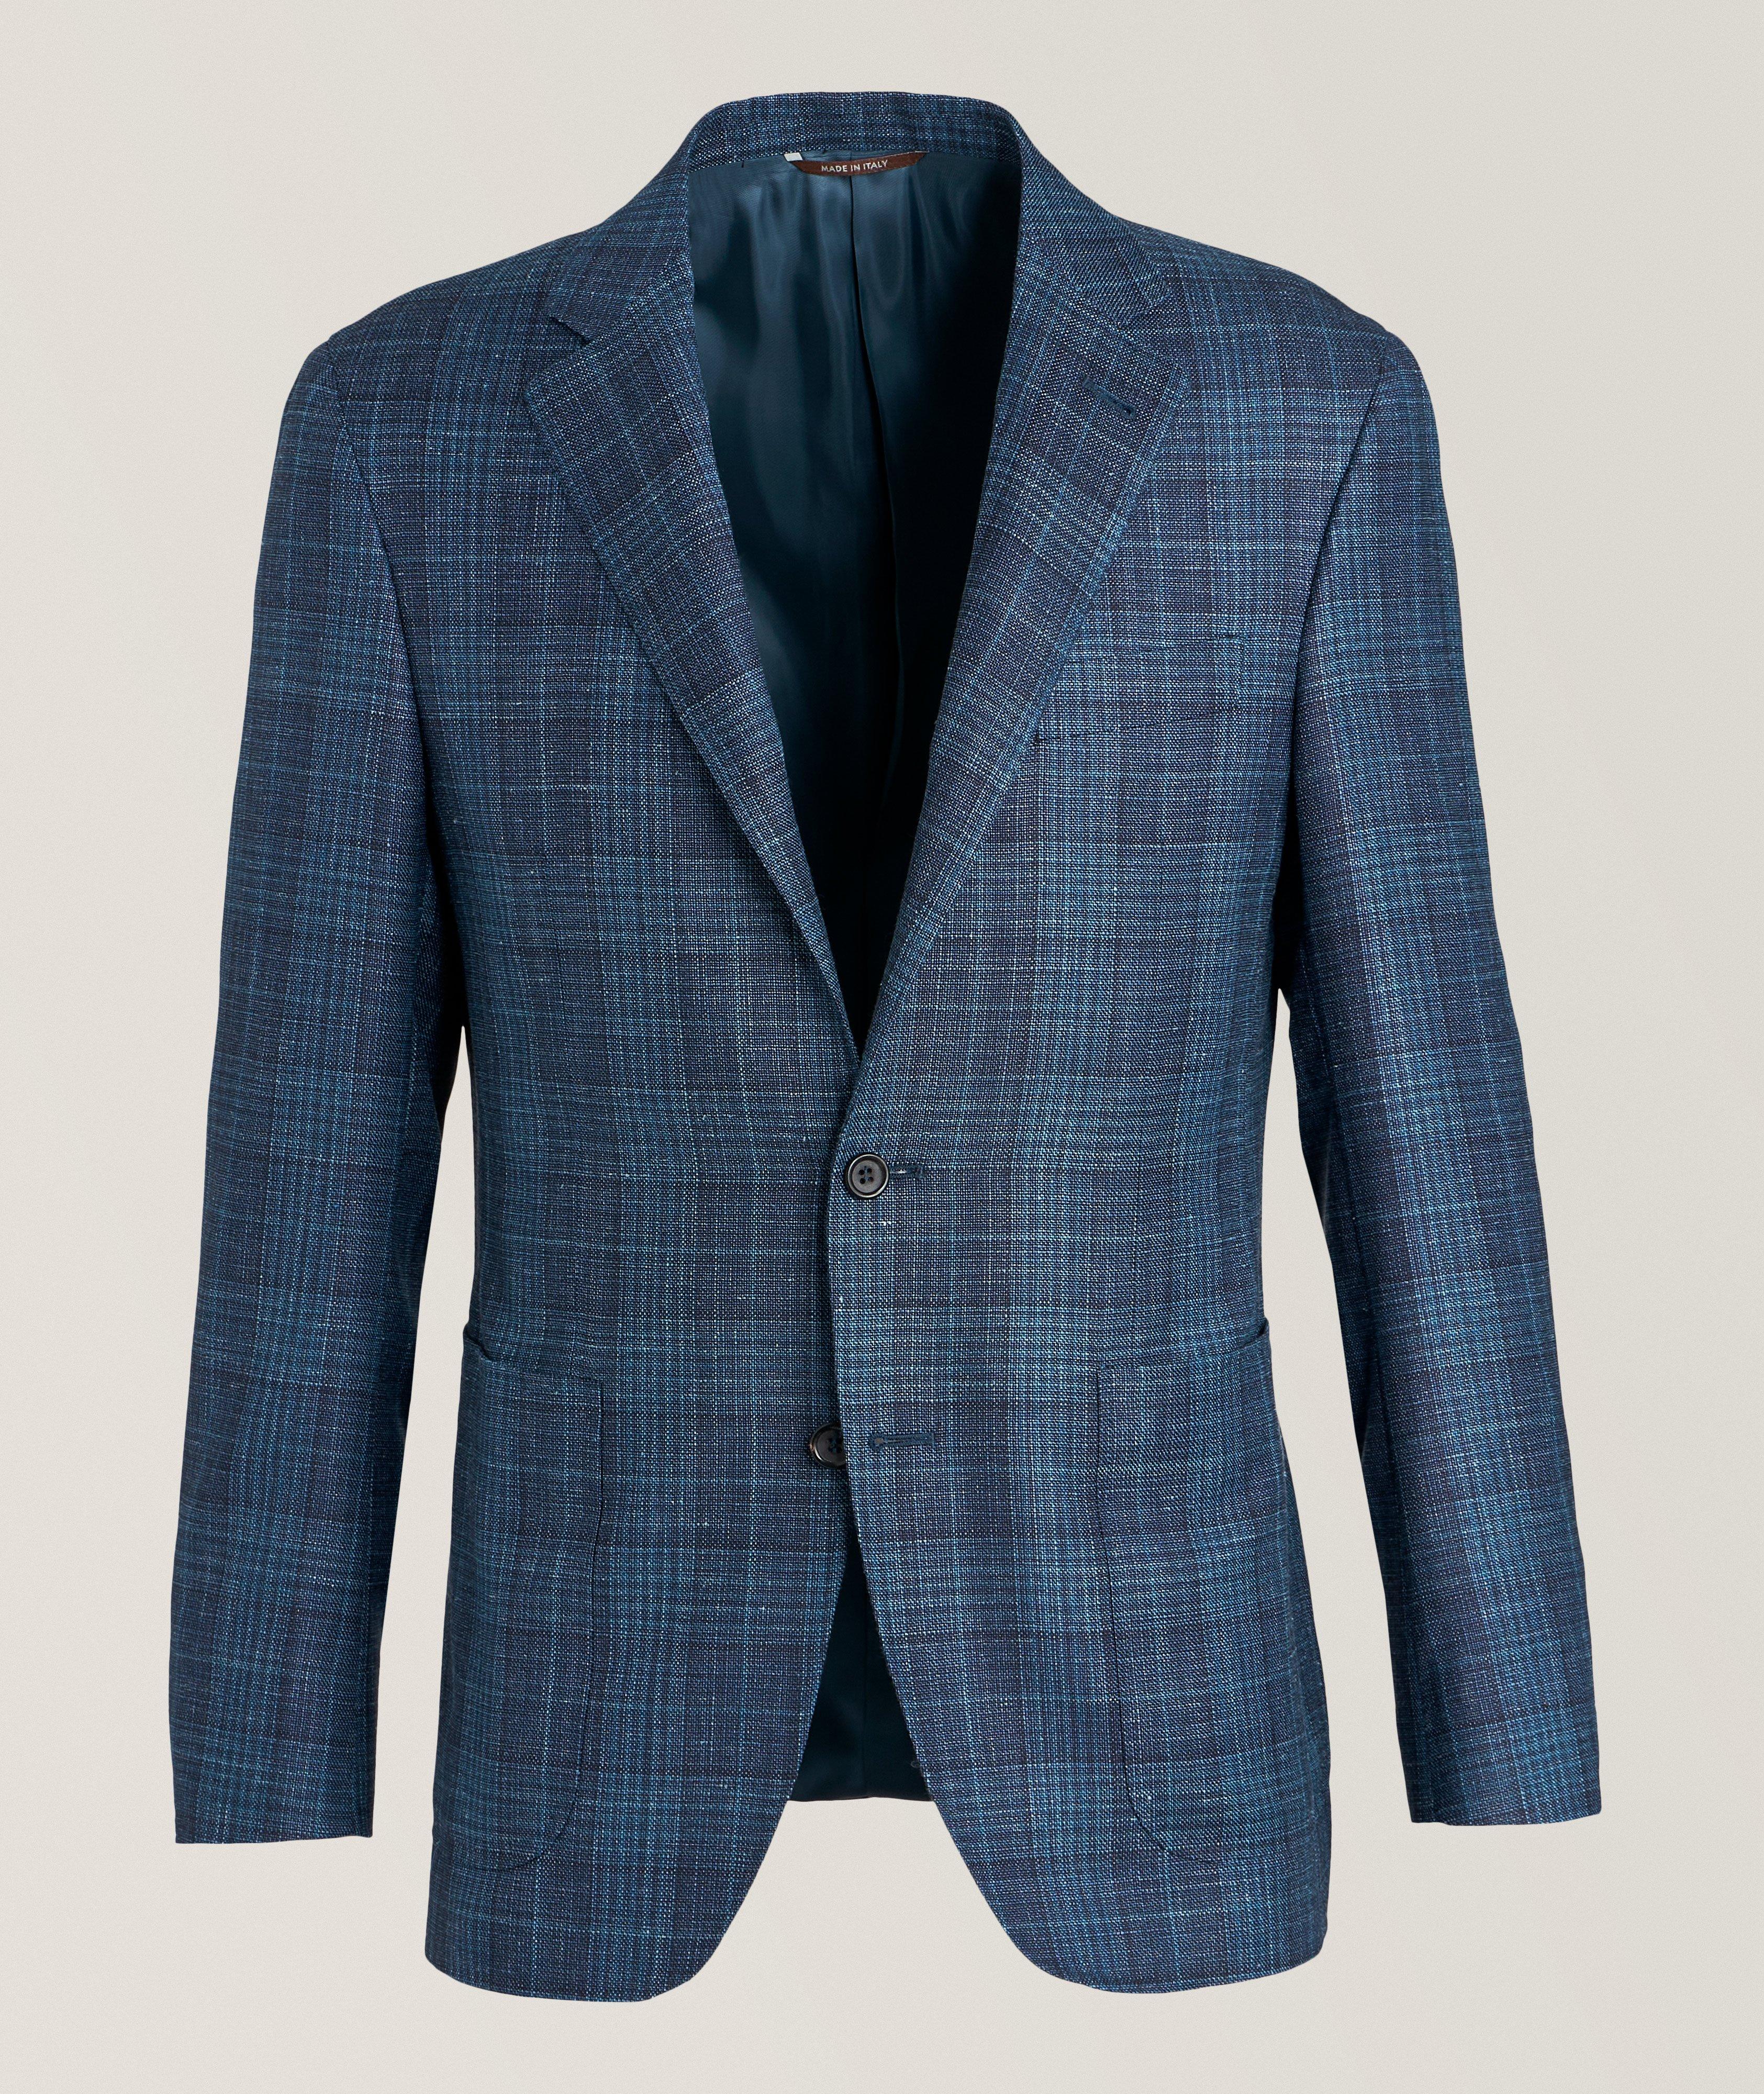 Kei Plaid Wool, Silk & Linen Sport Jacket image 0